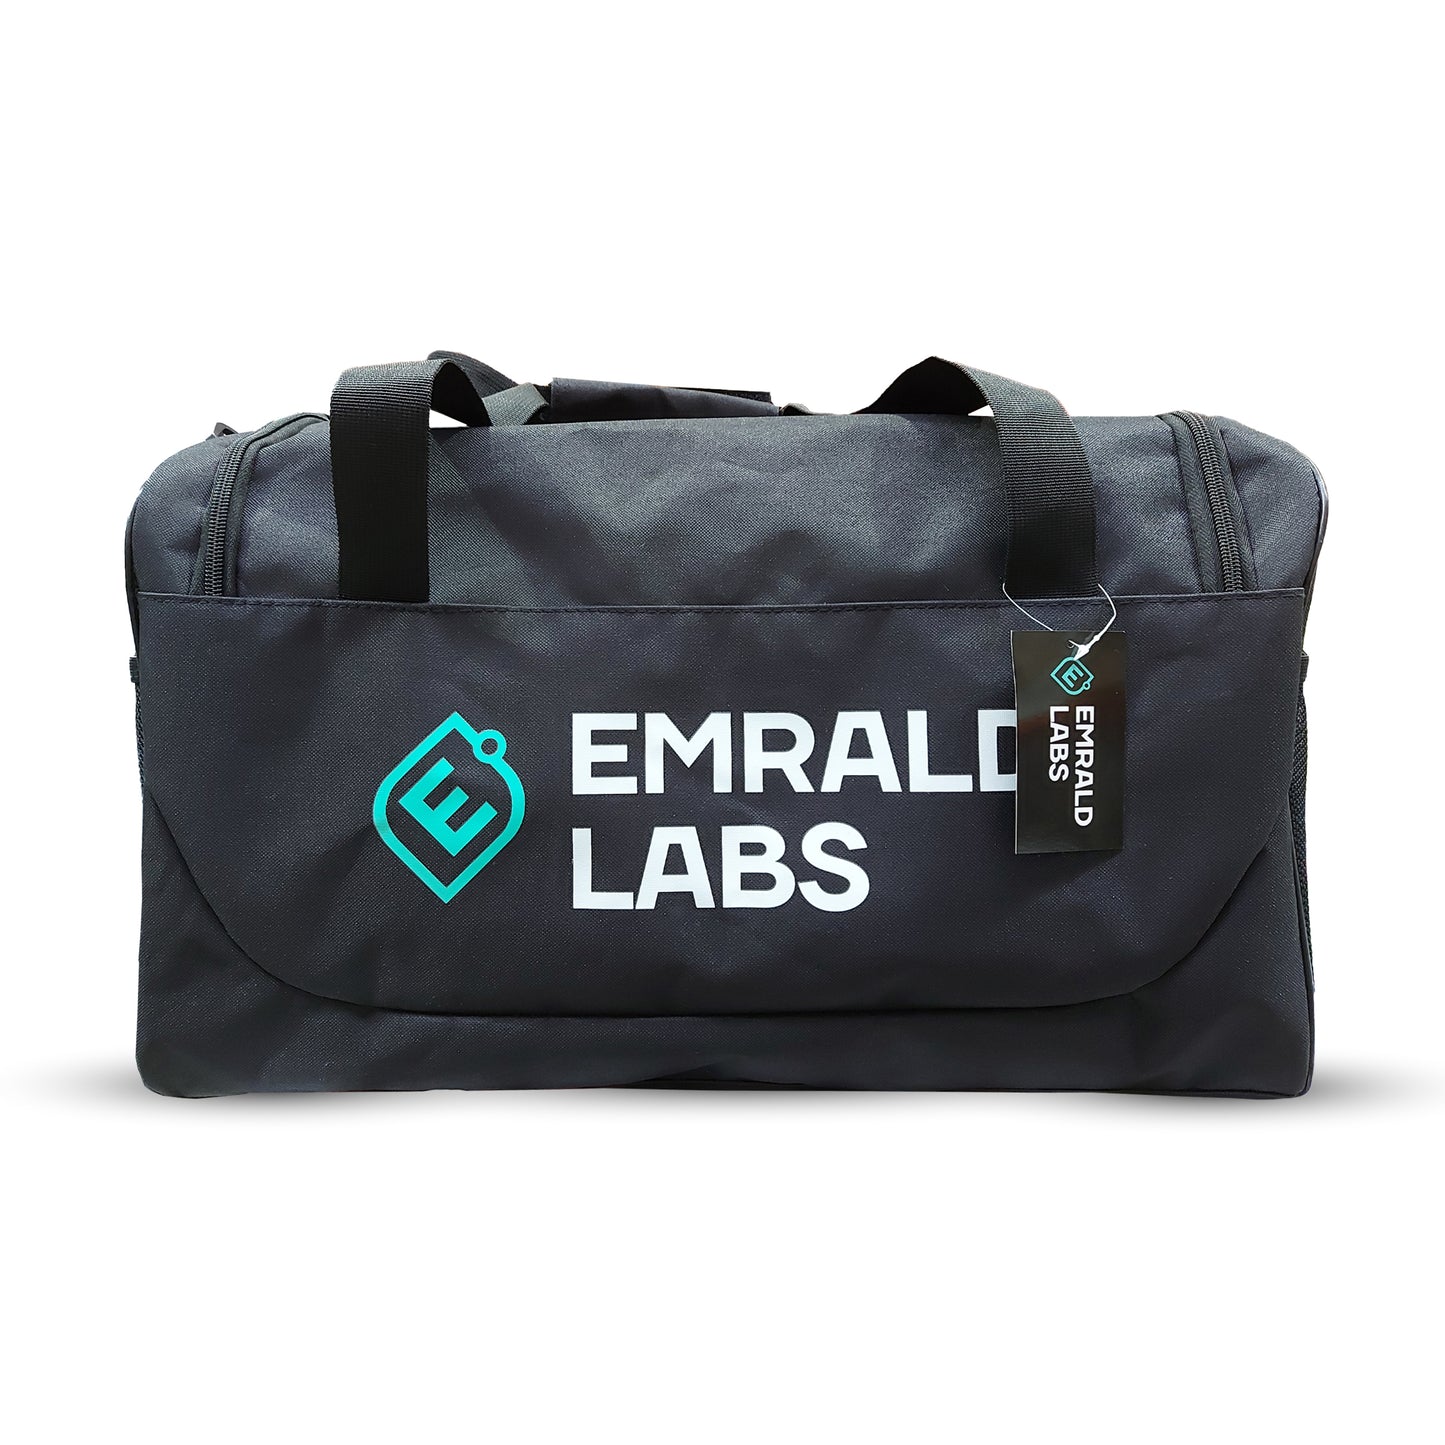 Emrald Labs Duffle Bag